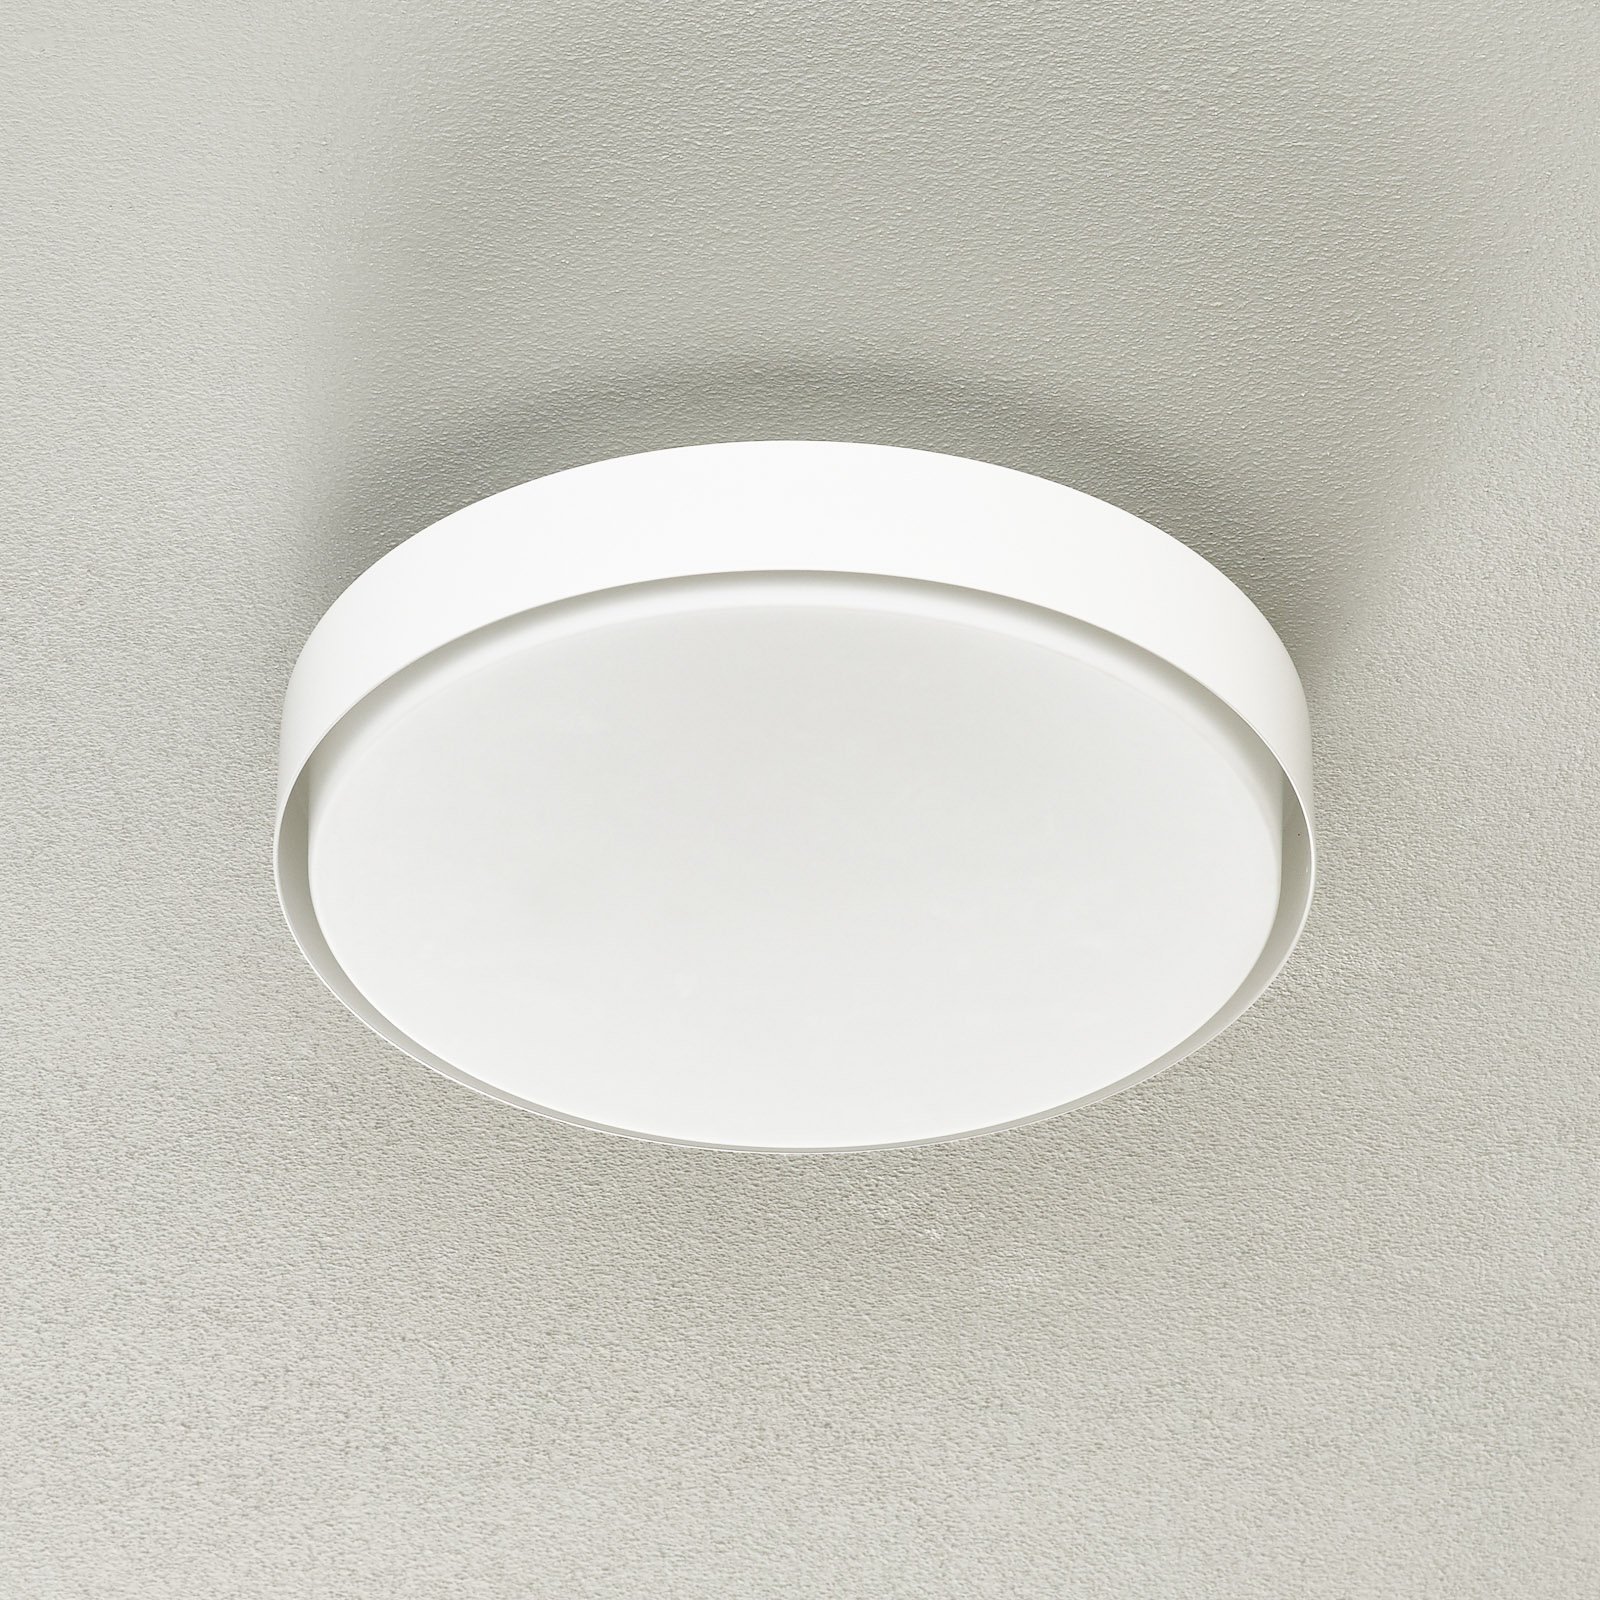 BEGA 34278 lampa sufitowa LED, biała Ø 36 cm, DALI